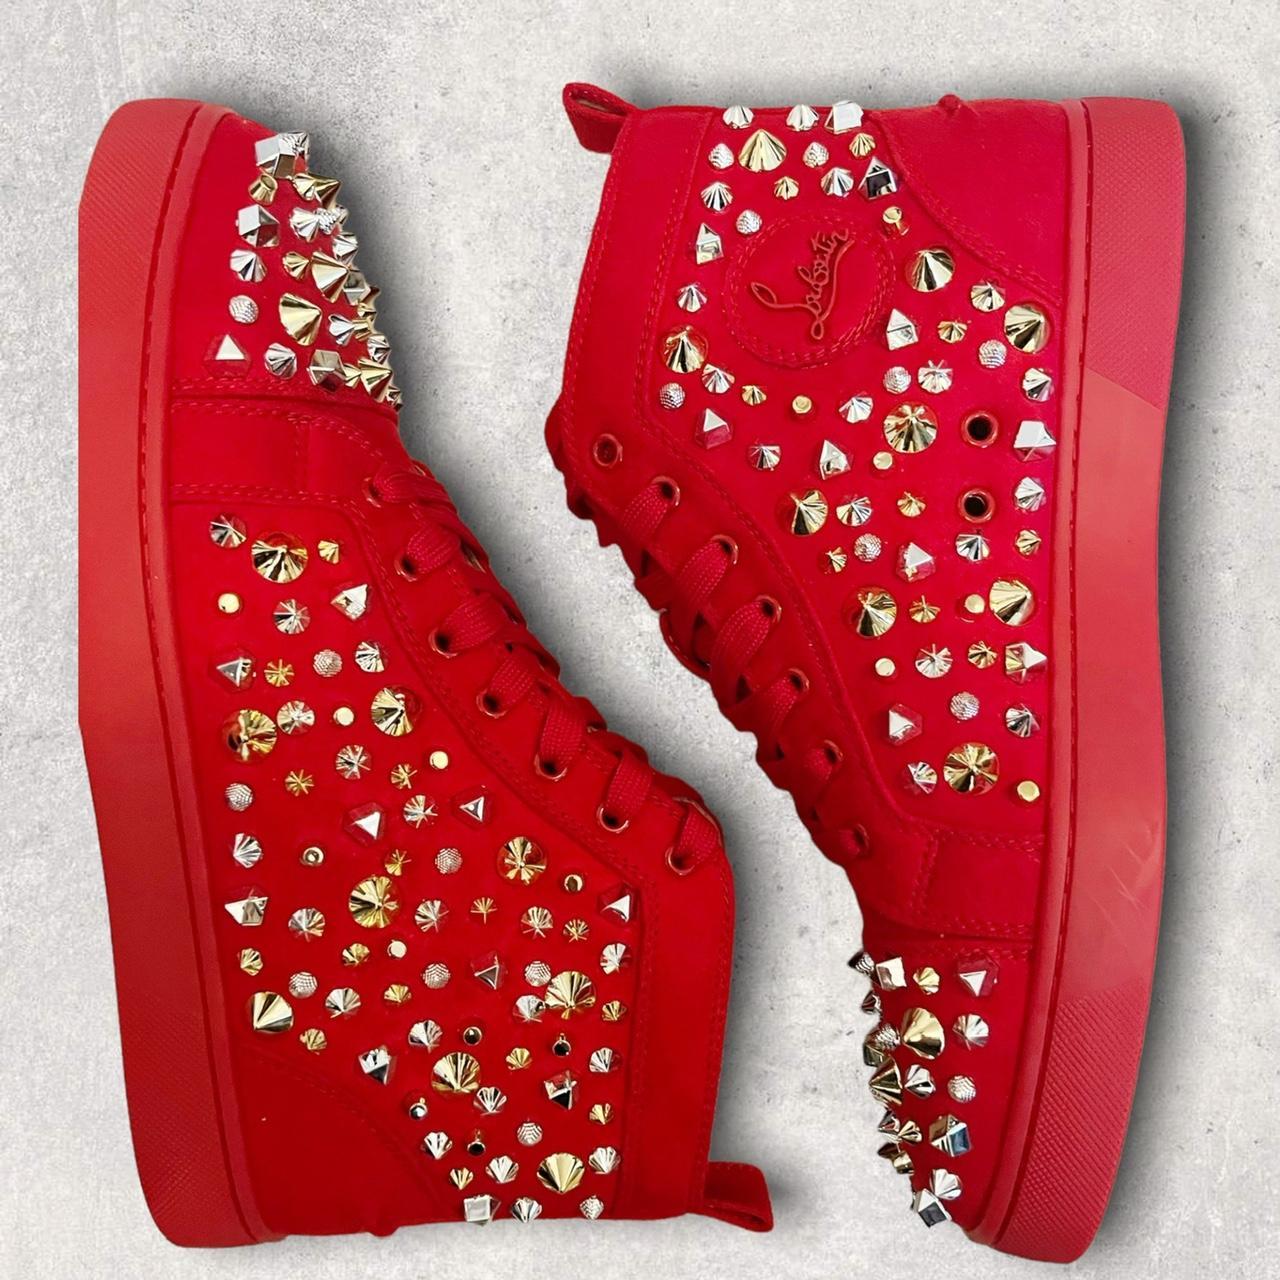 Christian Louboutin mens sneakers Size 8.5/9 UK. 9 Depop